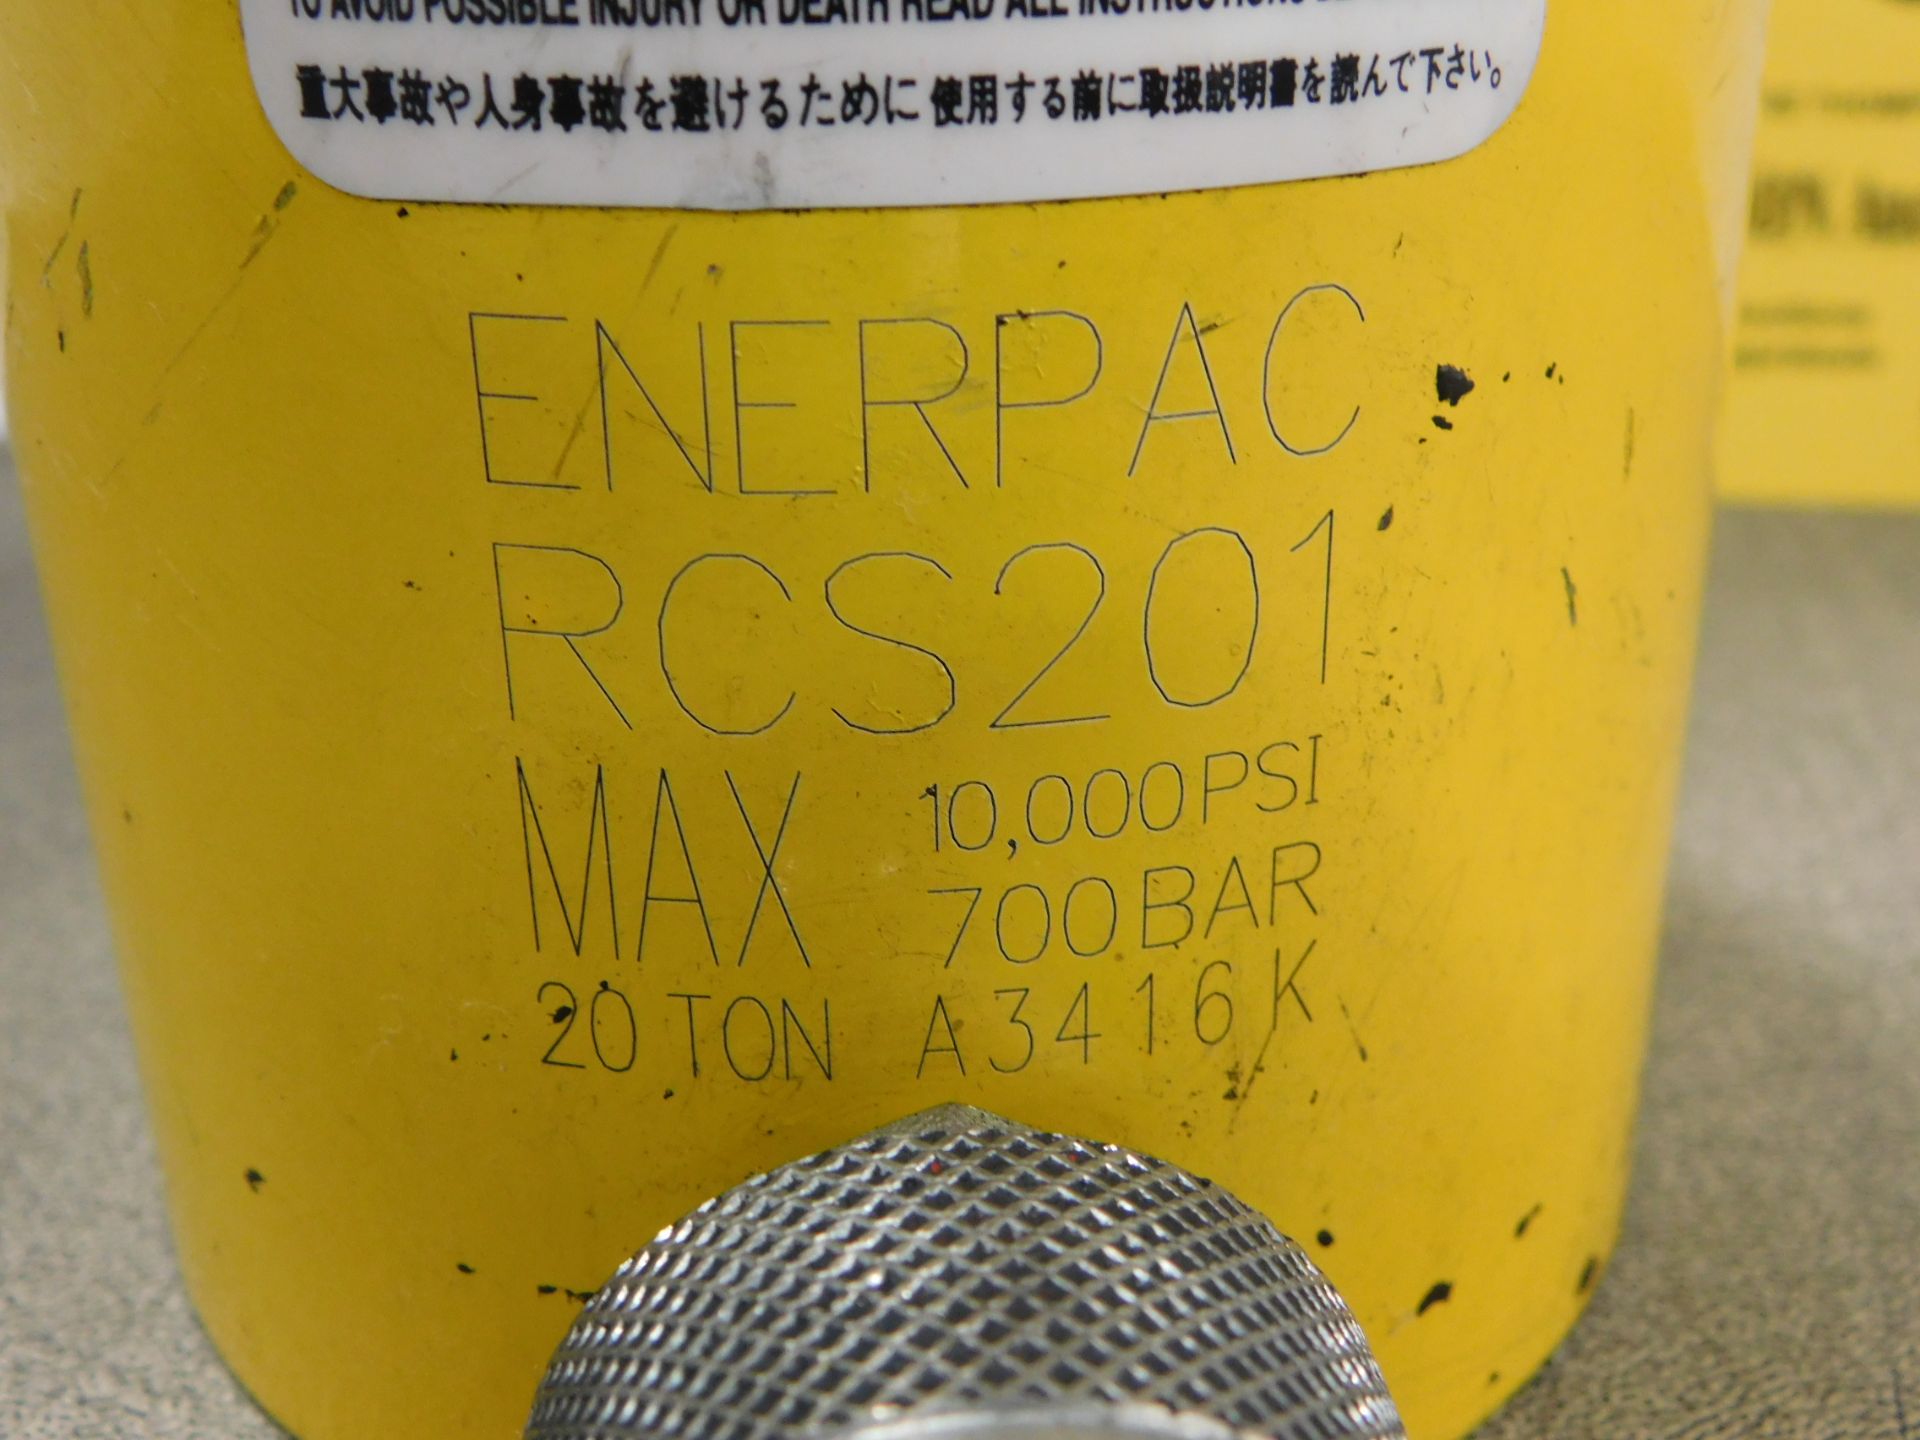 Enerpac Model RCS201 Hydraulic Cylinder, 20 Ton Capacity - Image 3 of 3